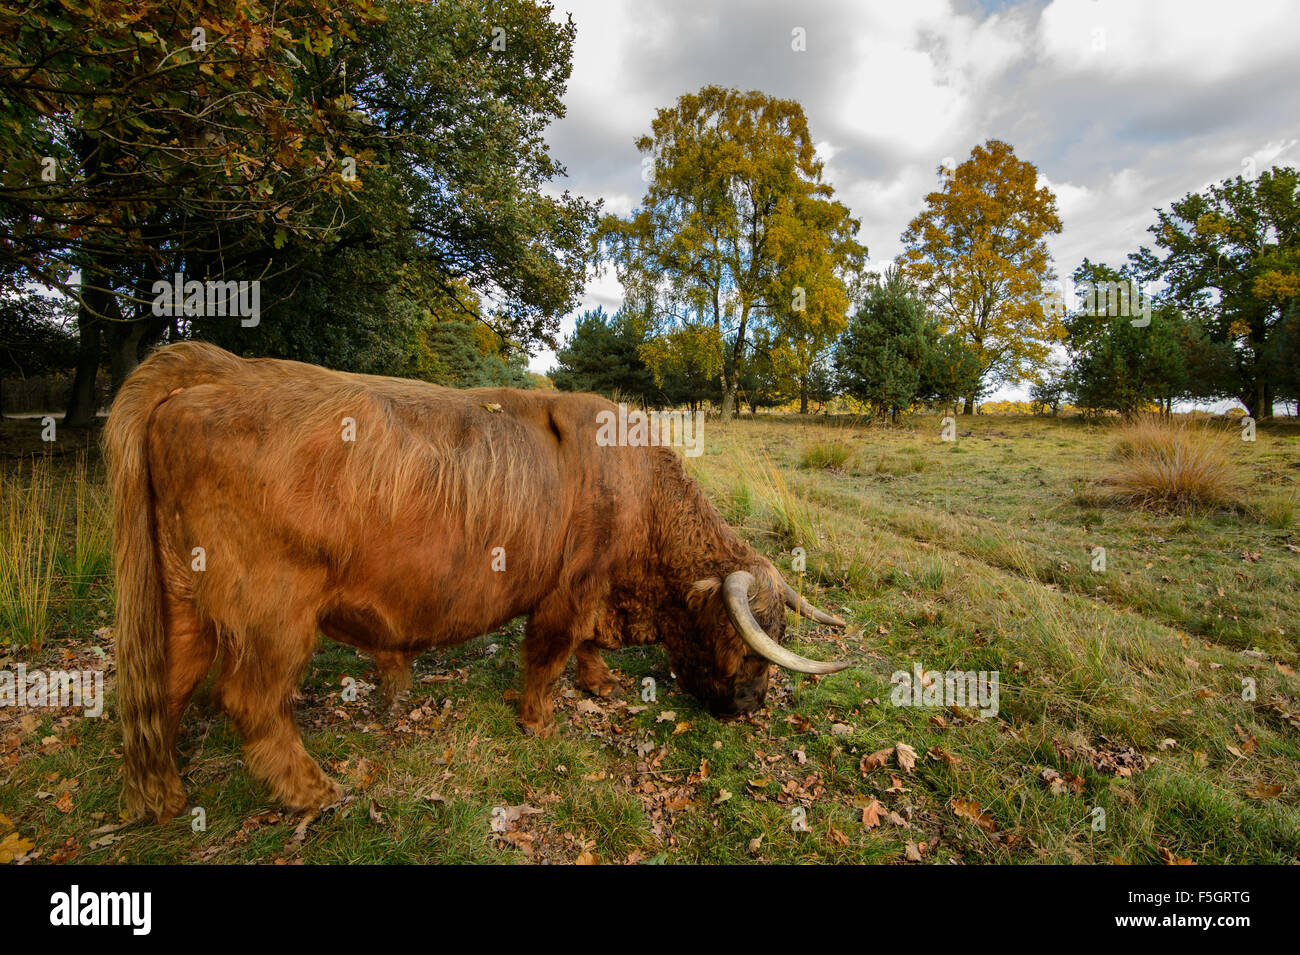 Highland scozzesi il pascolo di bestiame nella foresta Deelerwoud riserva naturale, Veluwe, Paesi Bassi Foto Stock